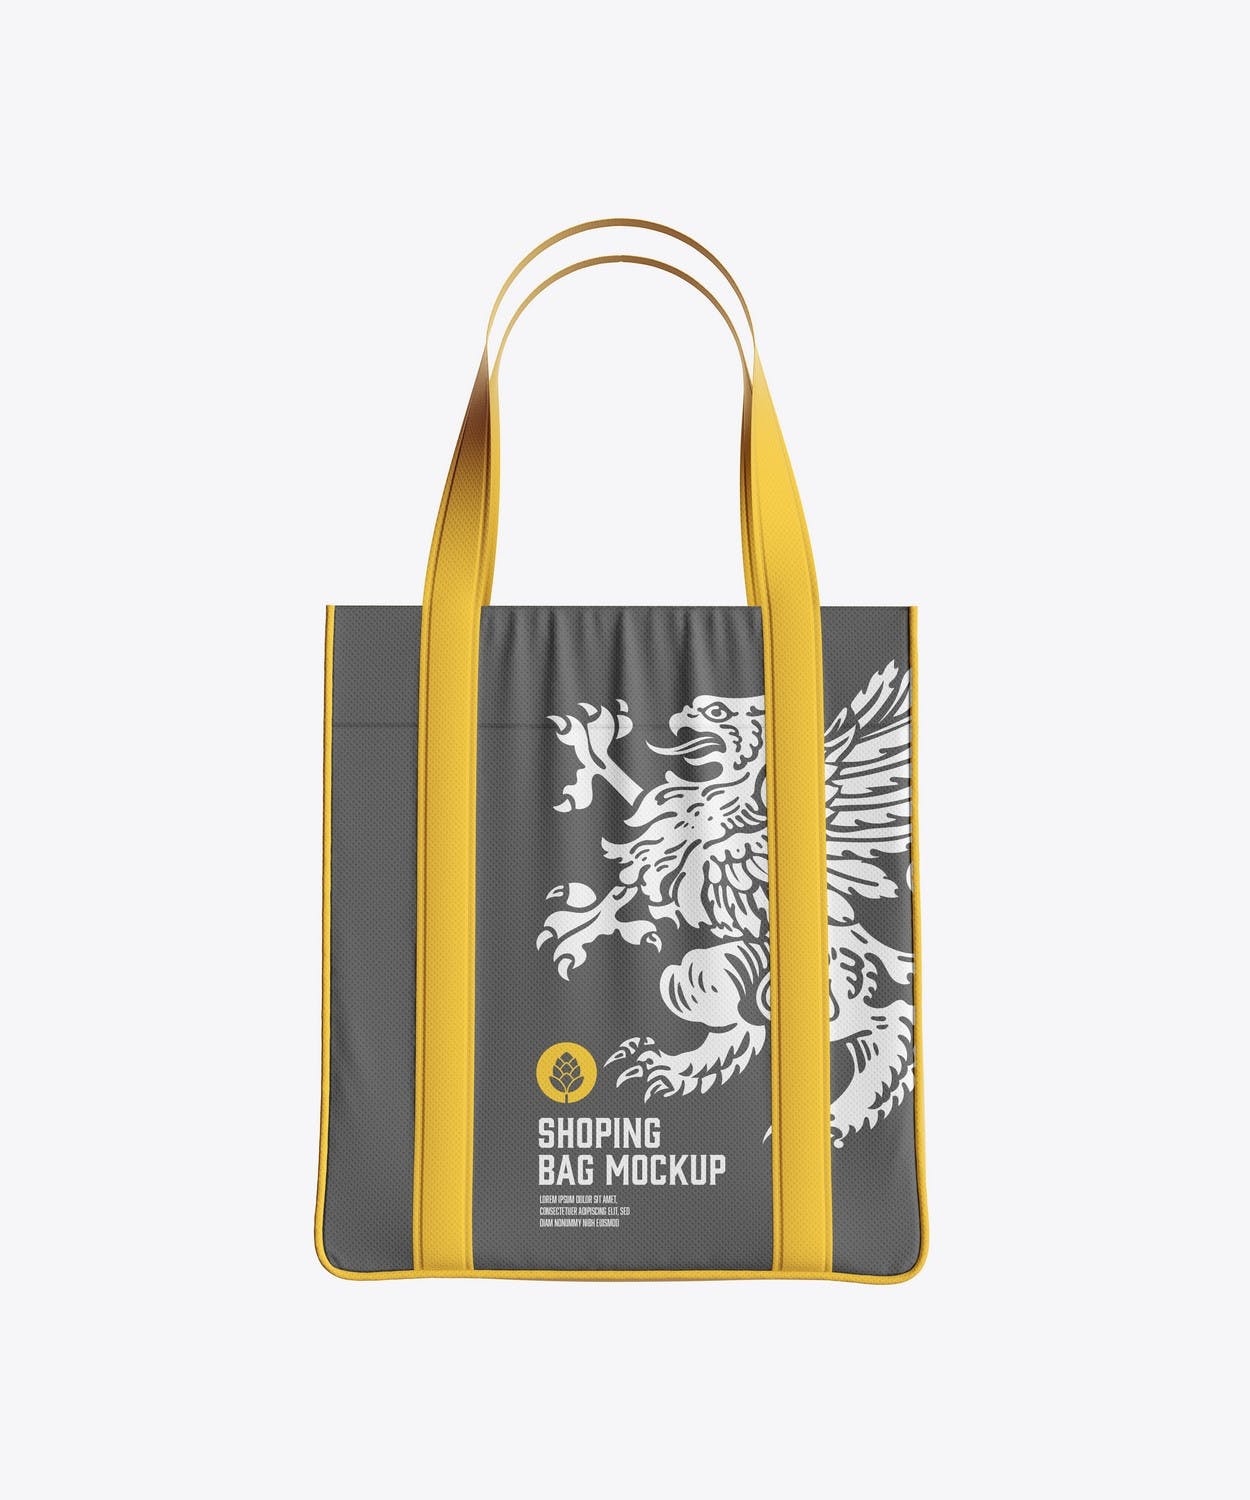 生态帆布袋包装Logo设计样机 Eco Canvas Bag Mockup 样机素材 第9张